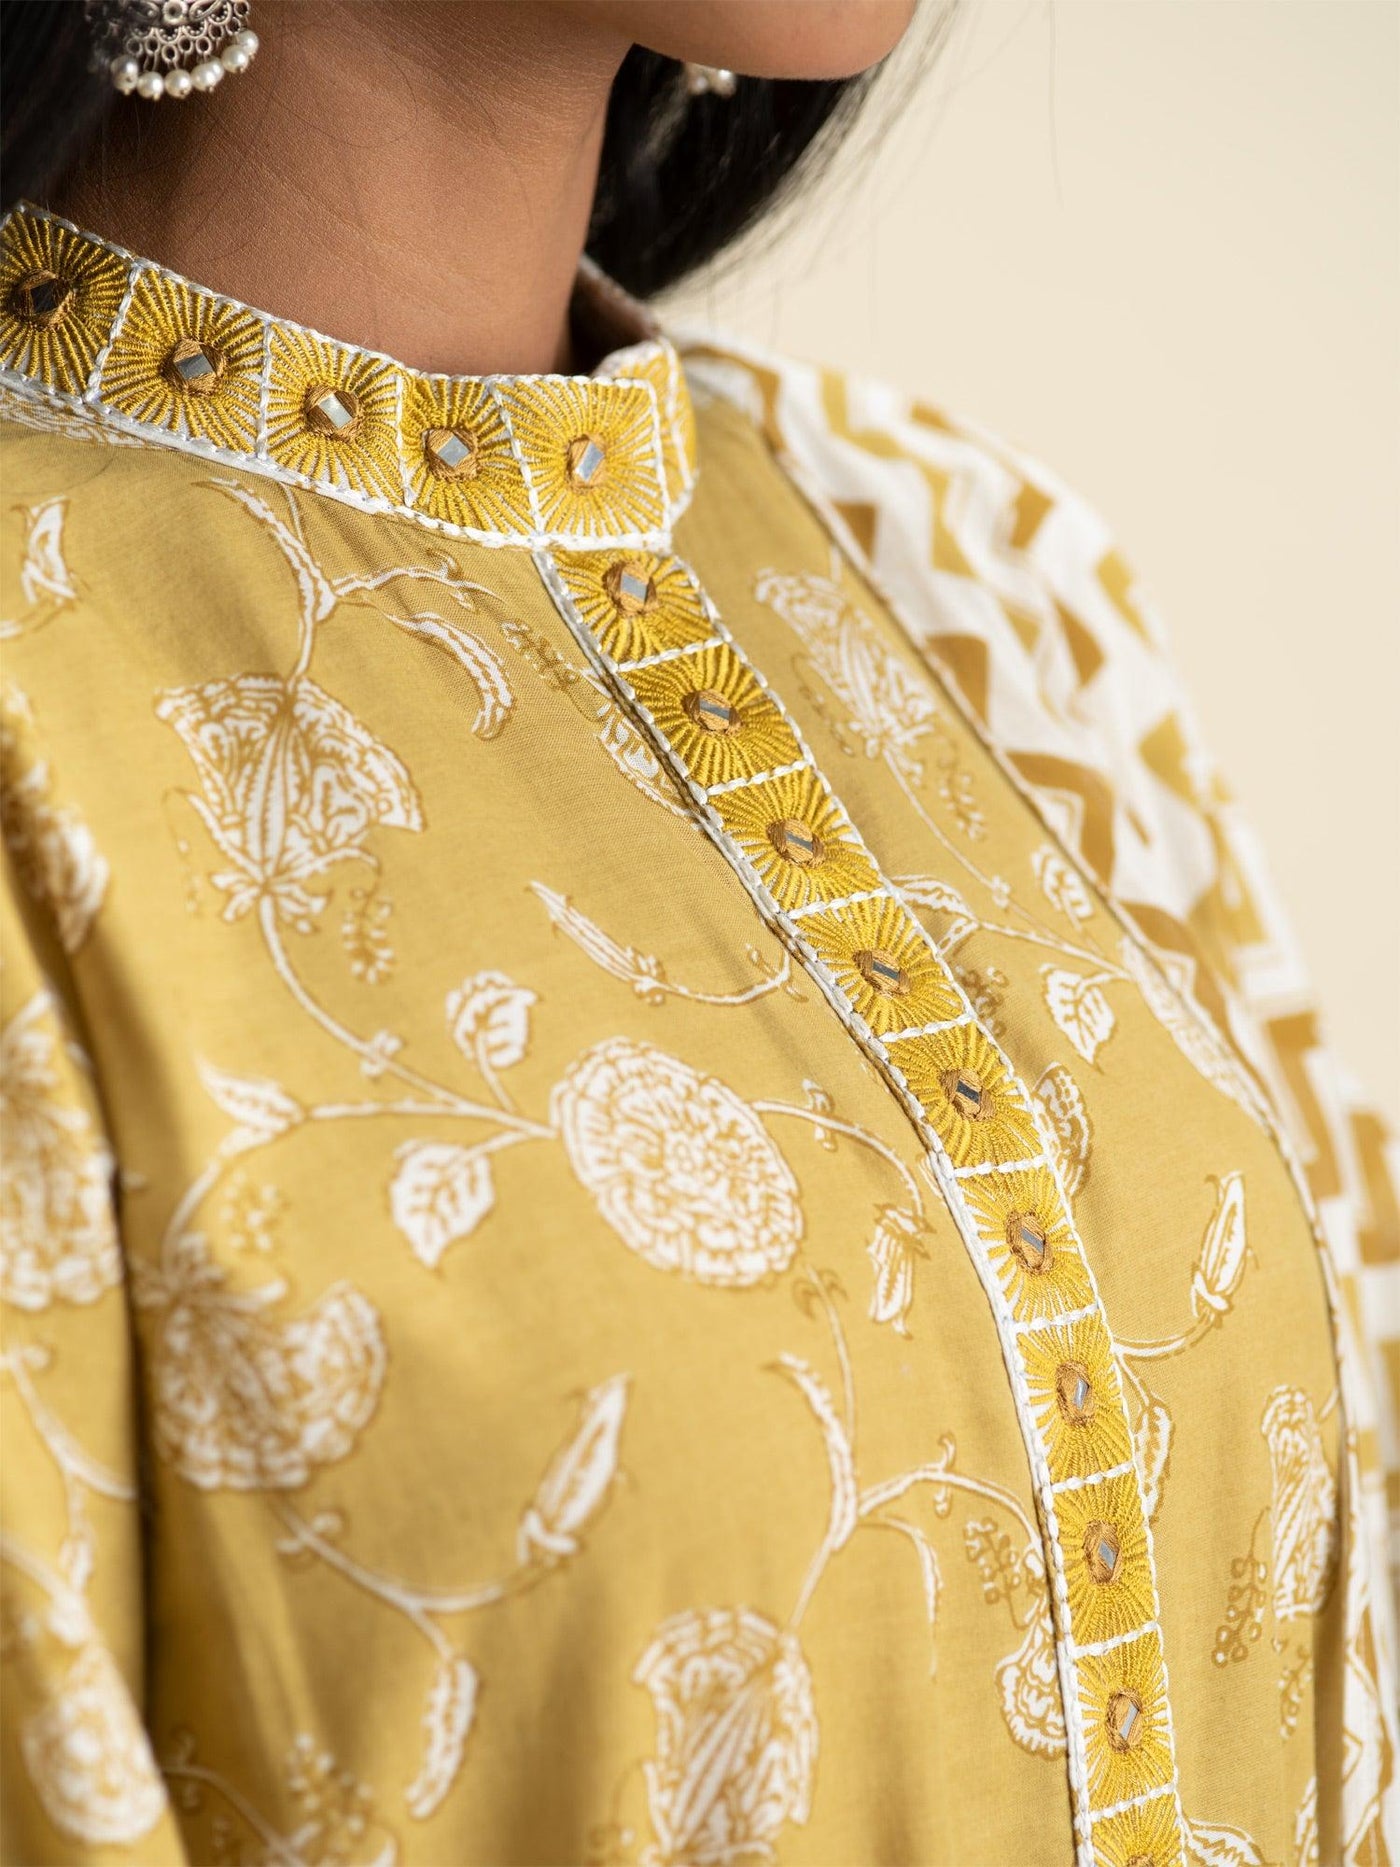 Mustard Printed Cotton Suit Set - Libas